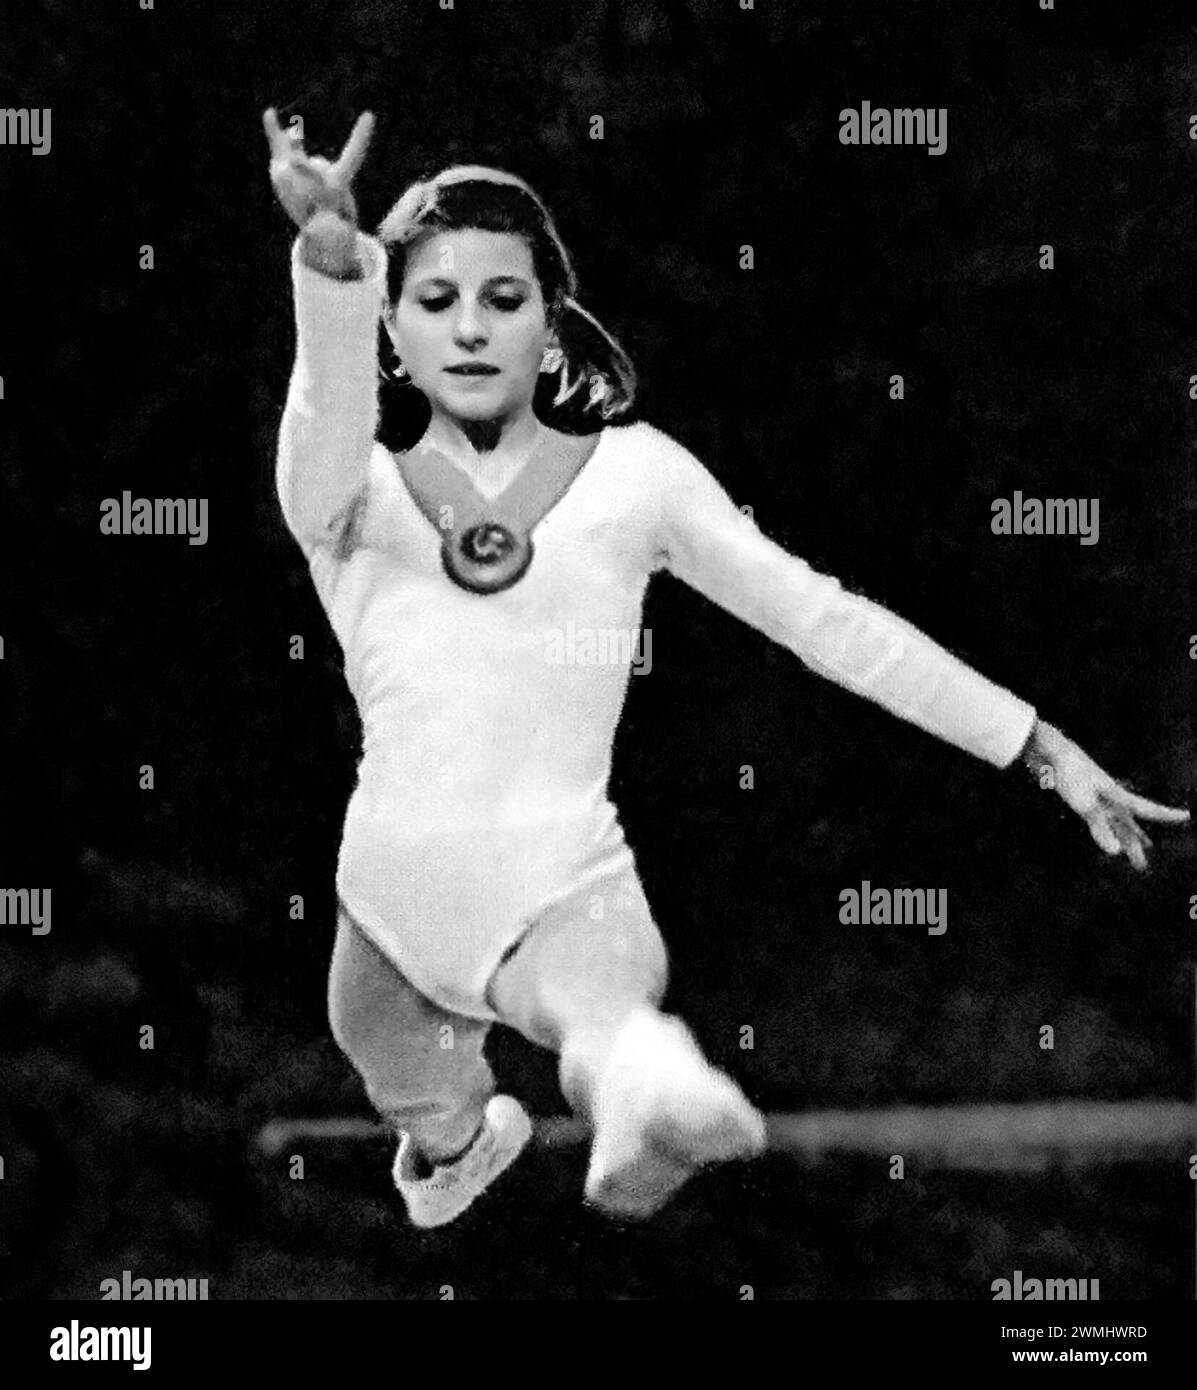 Olga Korbut. Portrait of the Belarusian gymnast, Olga Valentinovna Korbut (b. 1955), c. 1972 Stock Photo